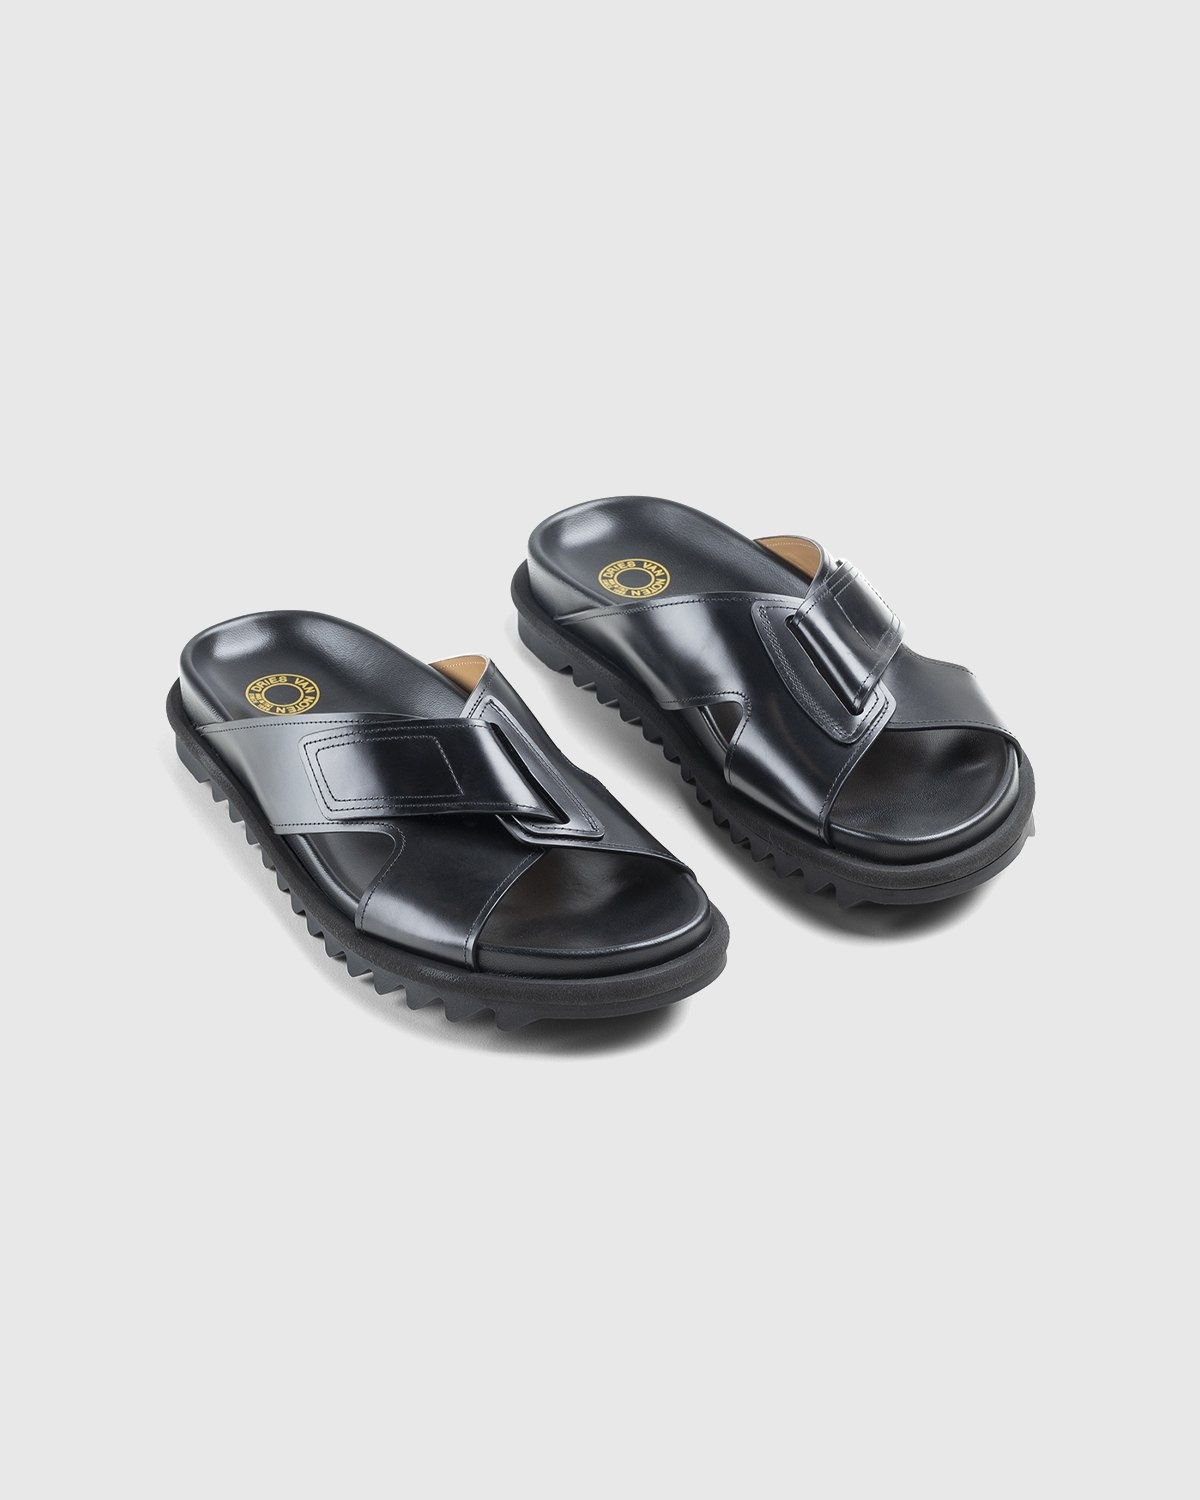 Dries van Noten – Leather Criss-Cross Sandals Black - Sandals - Black - Image 3